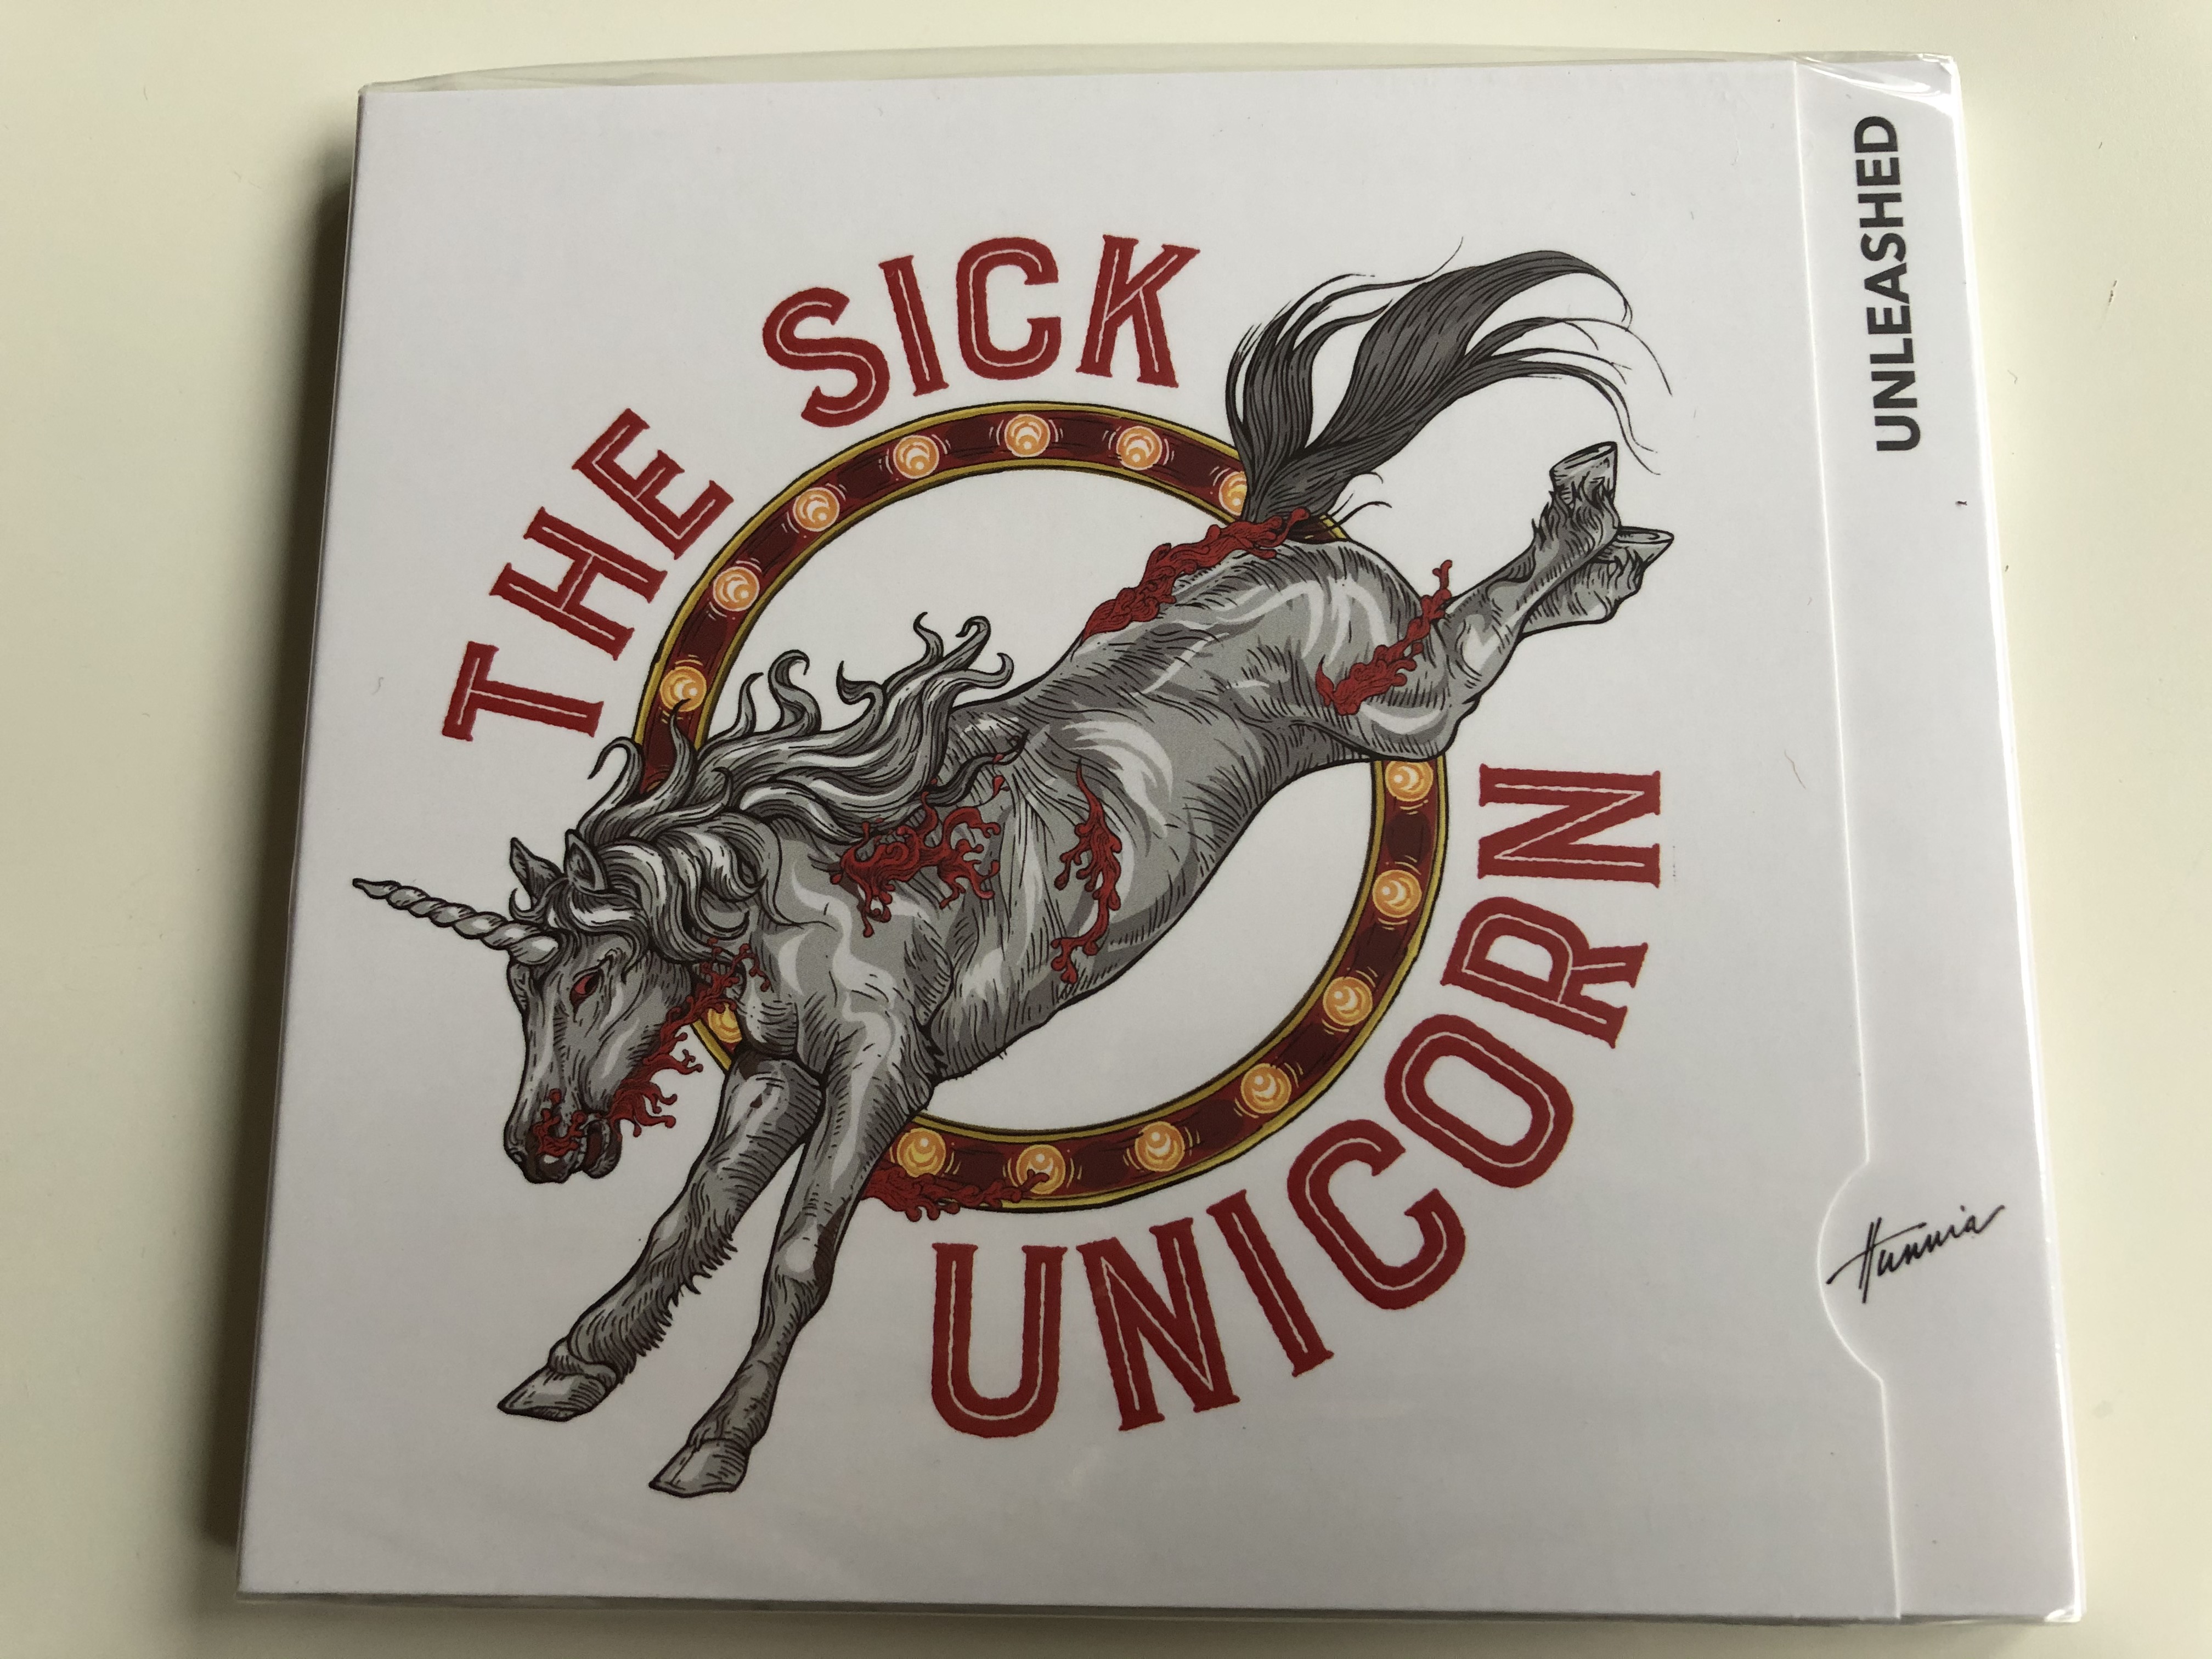 the-sick-unicorn-unleashed-hunnia-records-film-production-audio-cd-2019-hrcd1916-1-.jpg